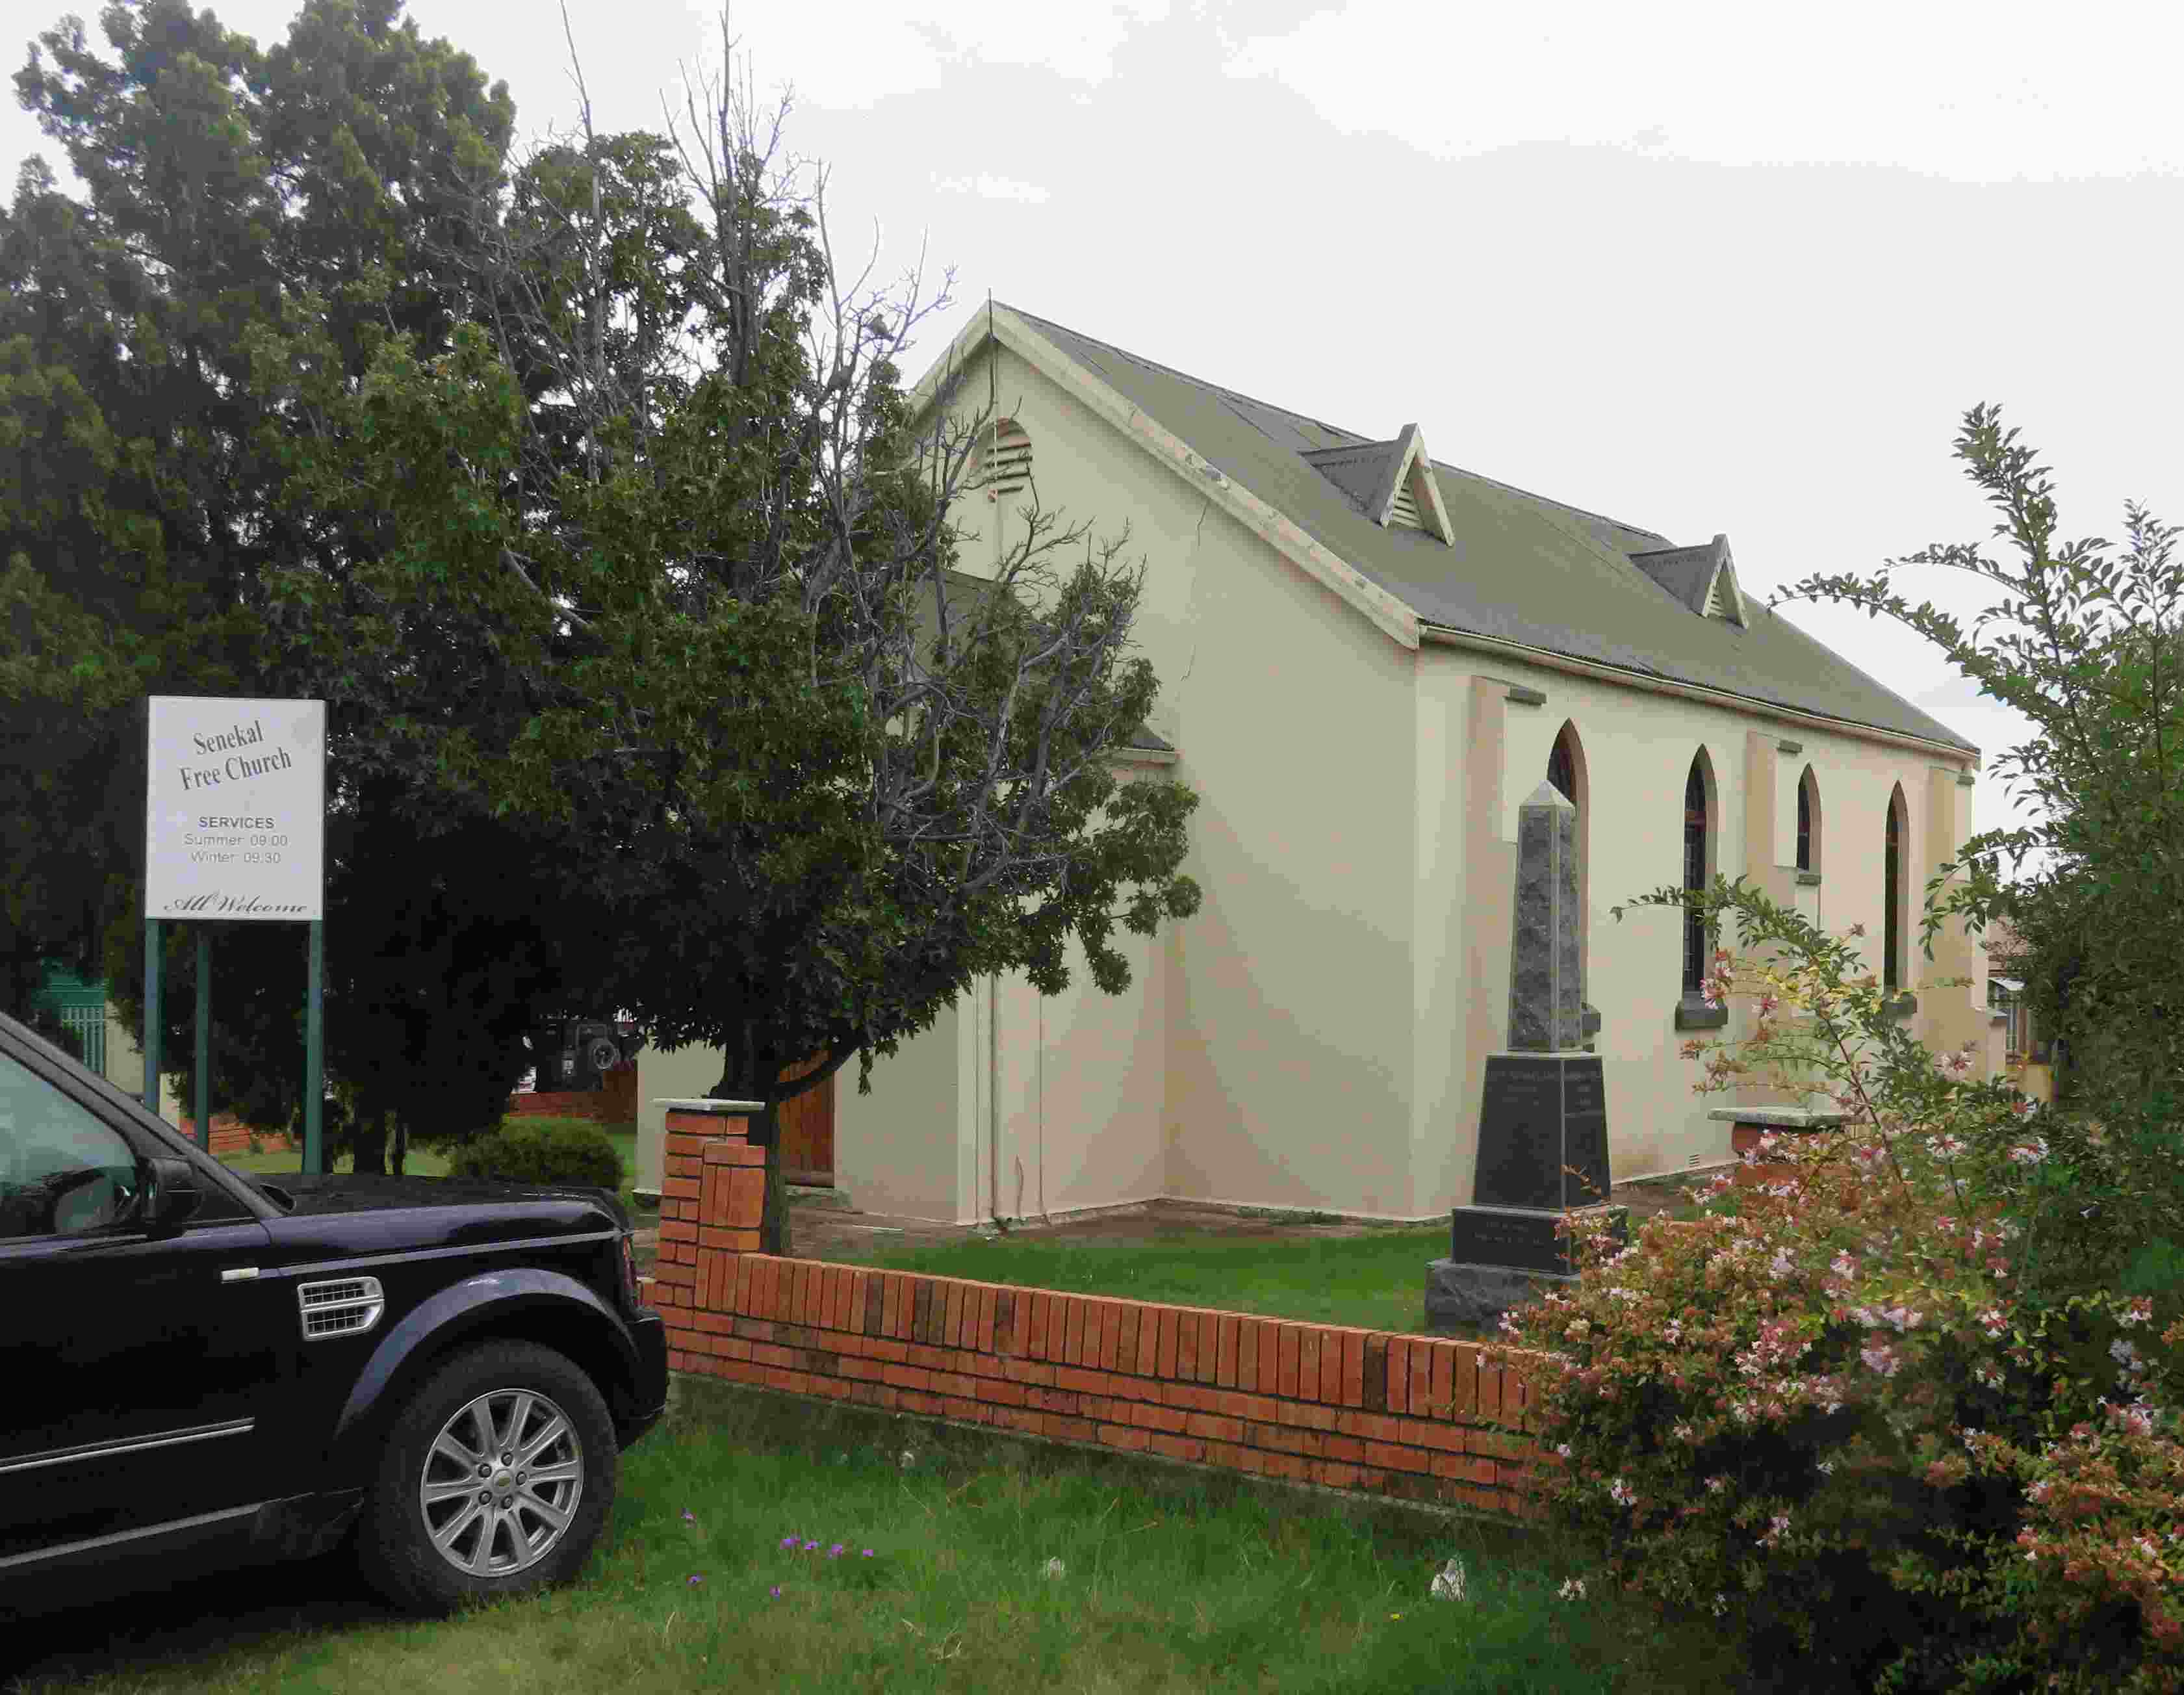 Senekal free church